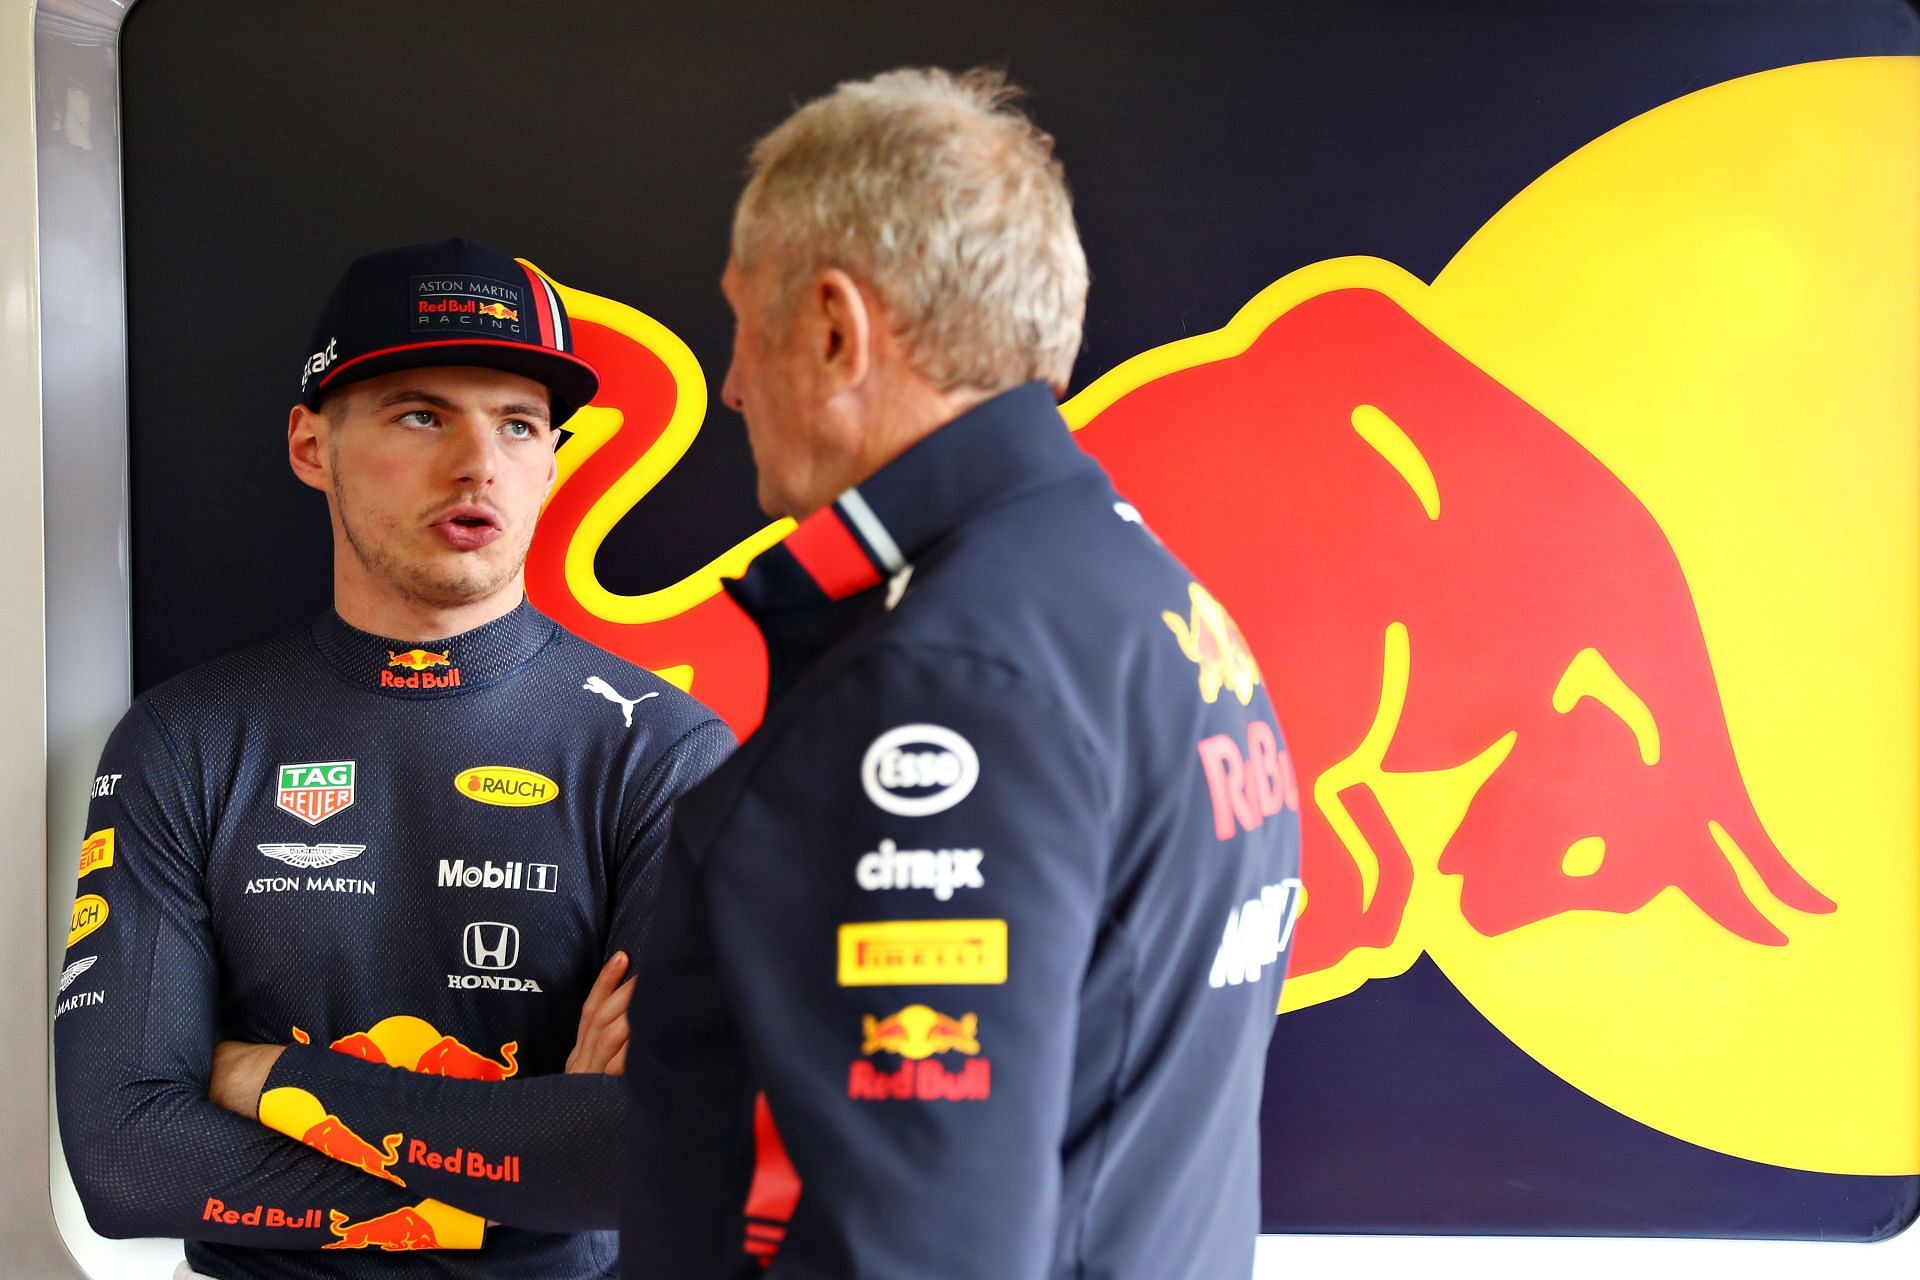 Max Verstappen (left) and Helmut Marko (right) ahead of the 2019 Monaco Grand Prix